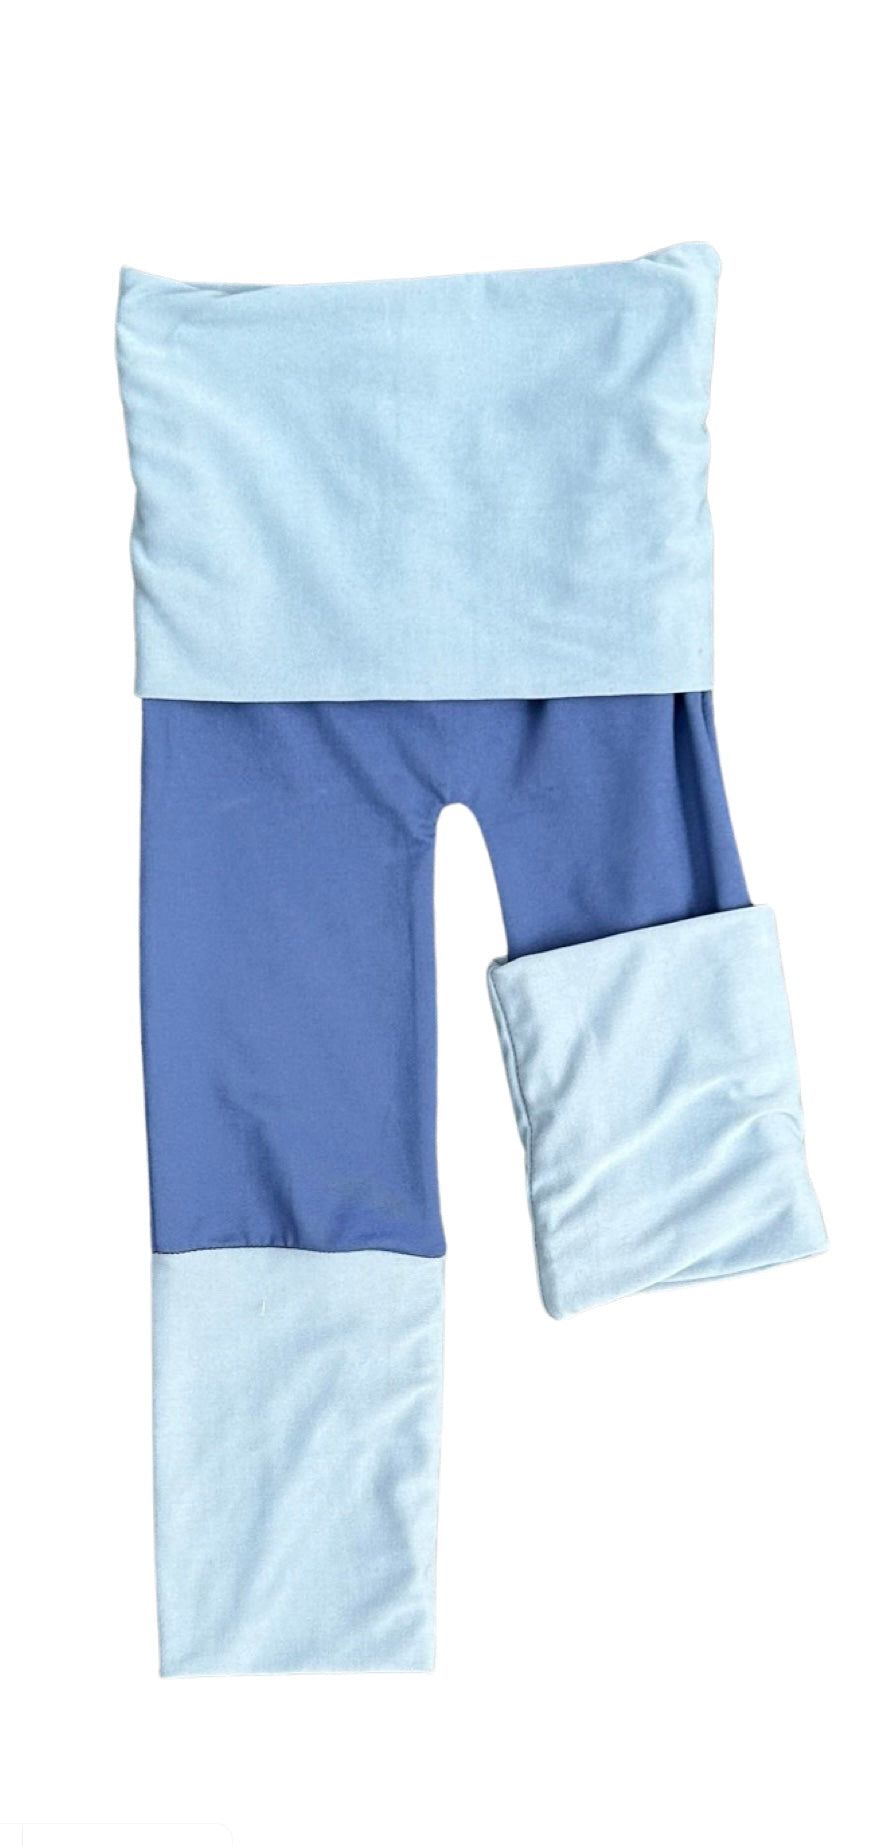 Adjustable Pants - Light Blue with Sky Blue